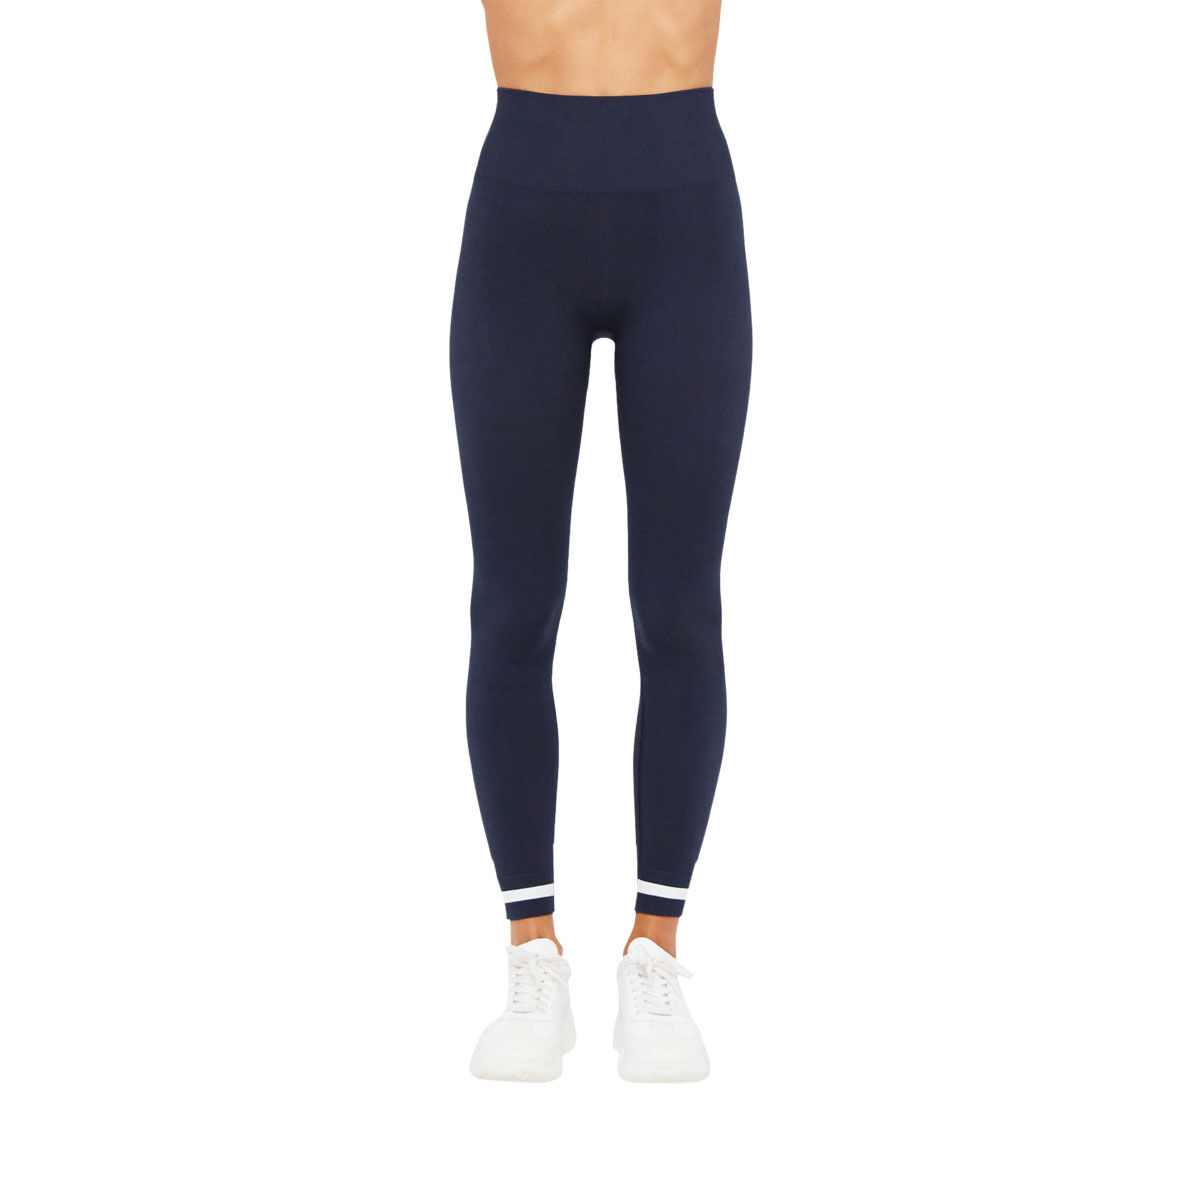 Jockey Womens Capri Leggings Athletic Workout Pants Mid Rise Blue